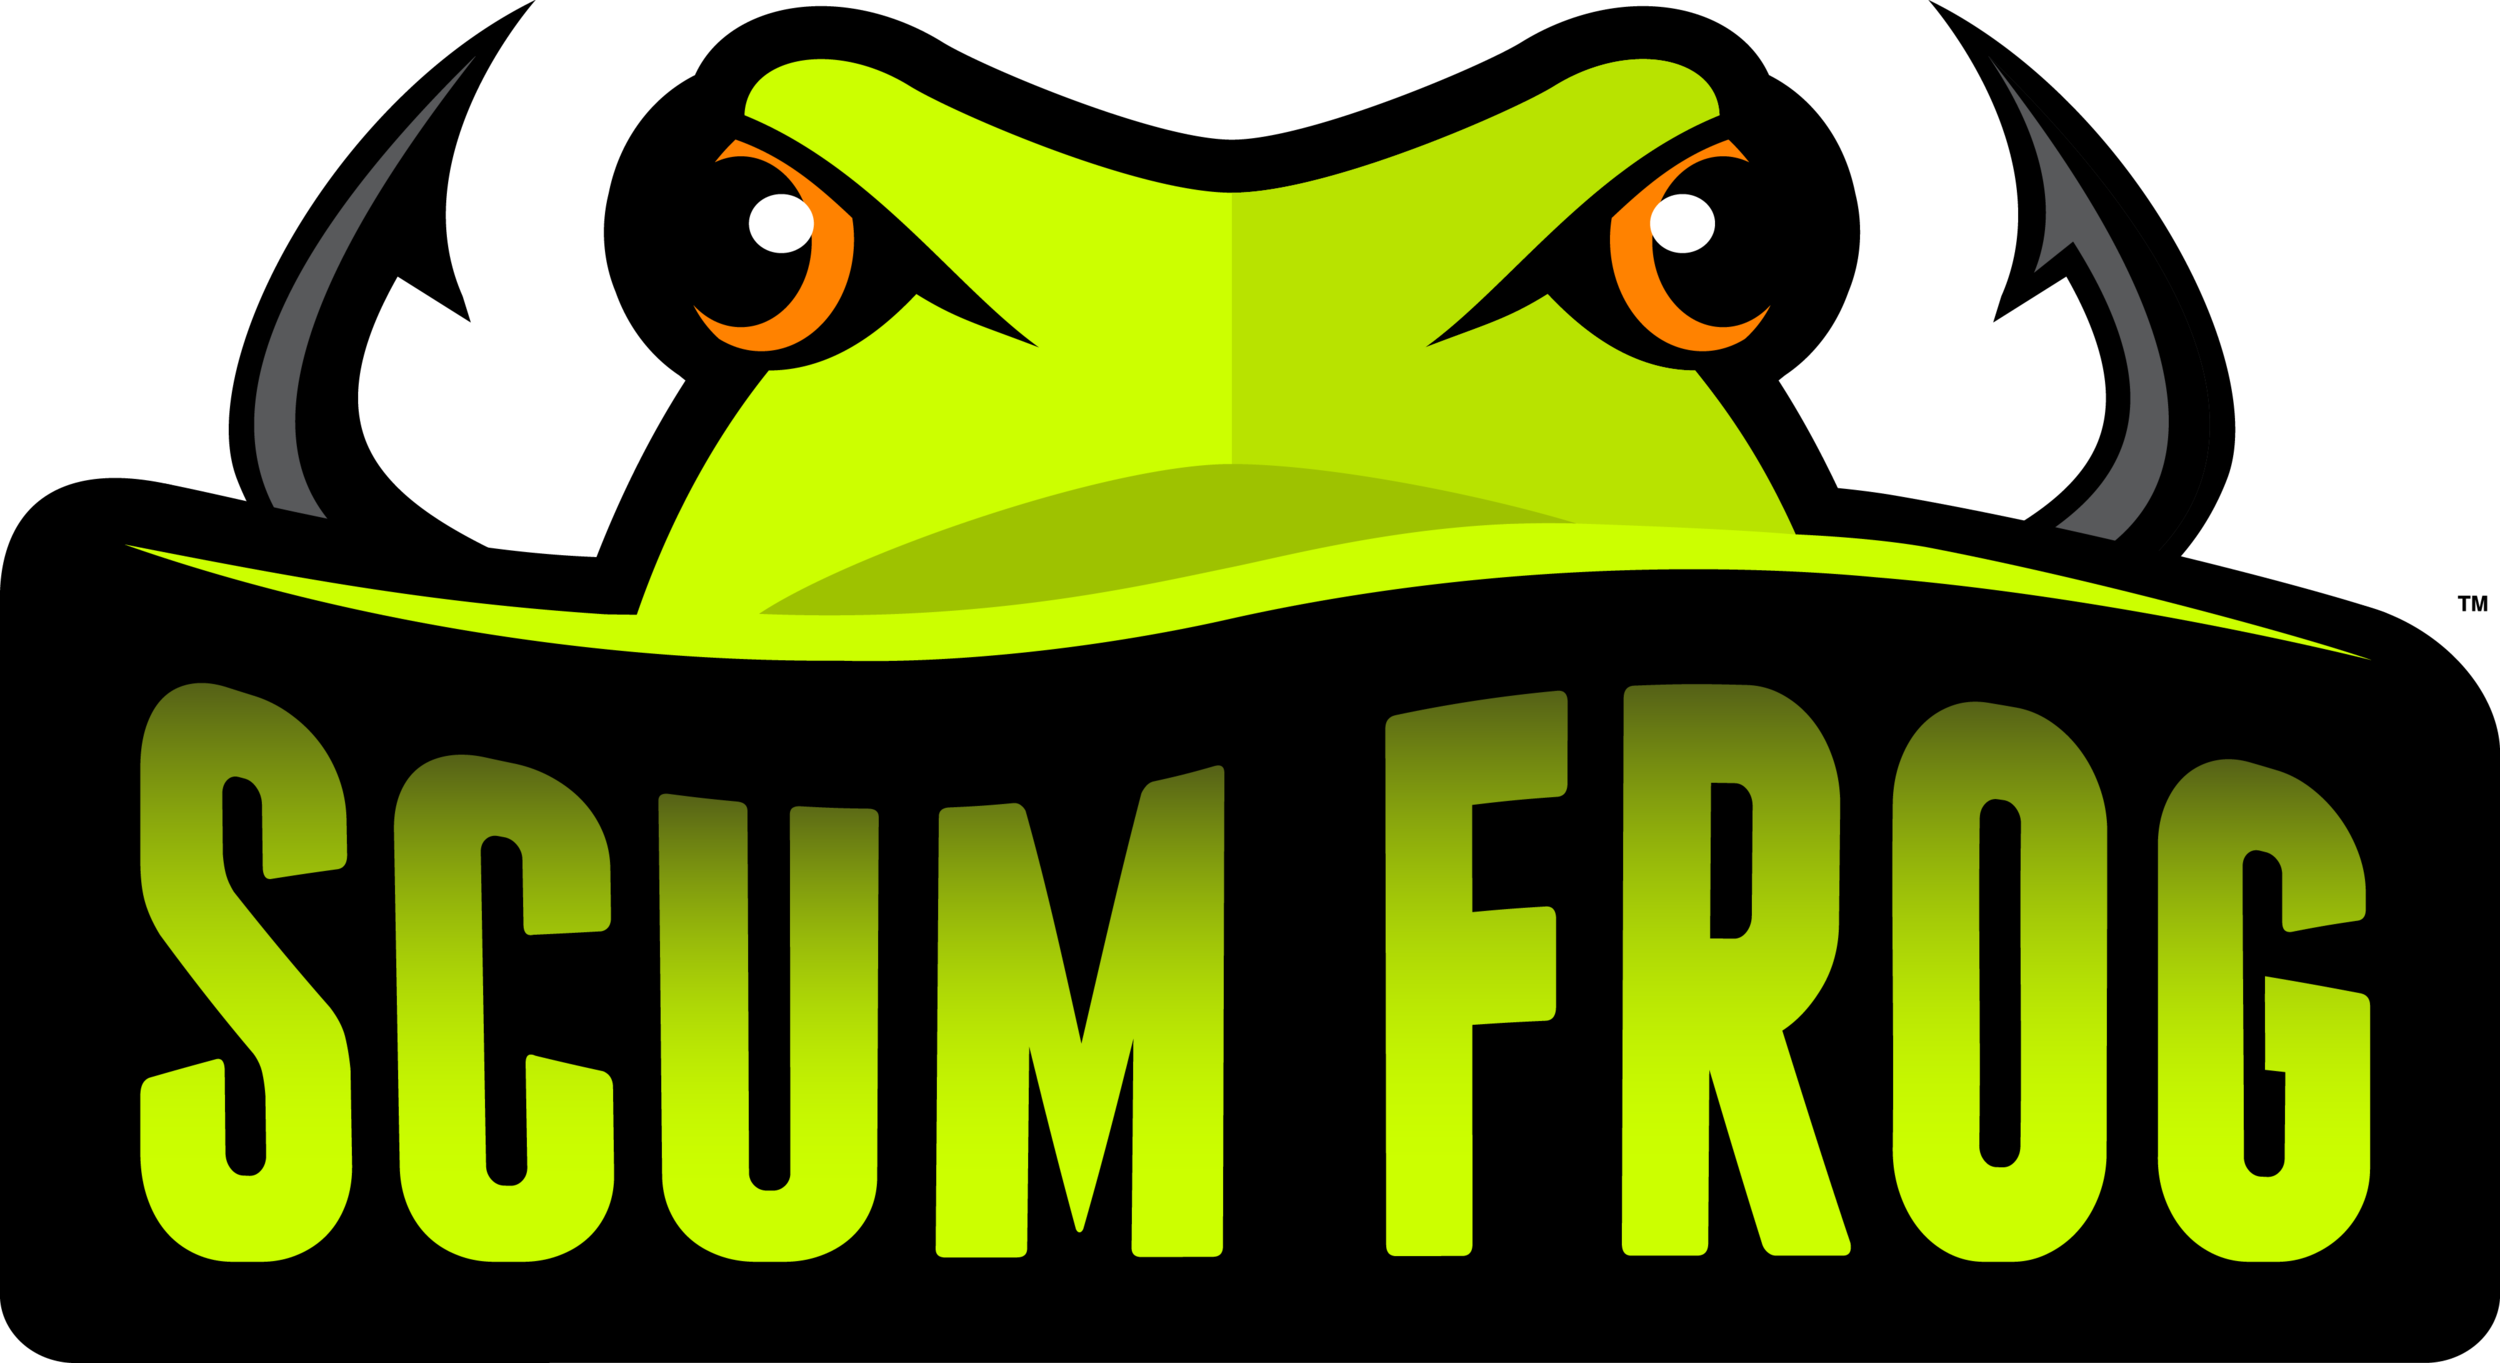 Scum Frog.png